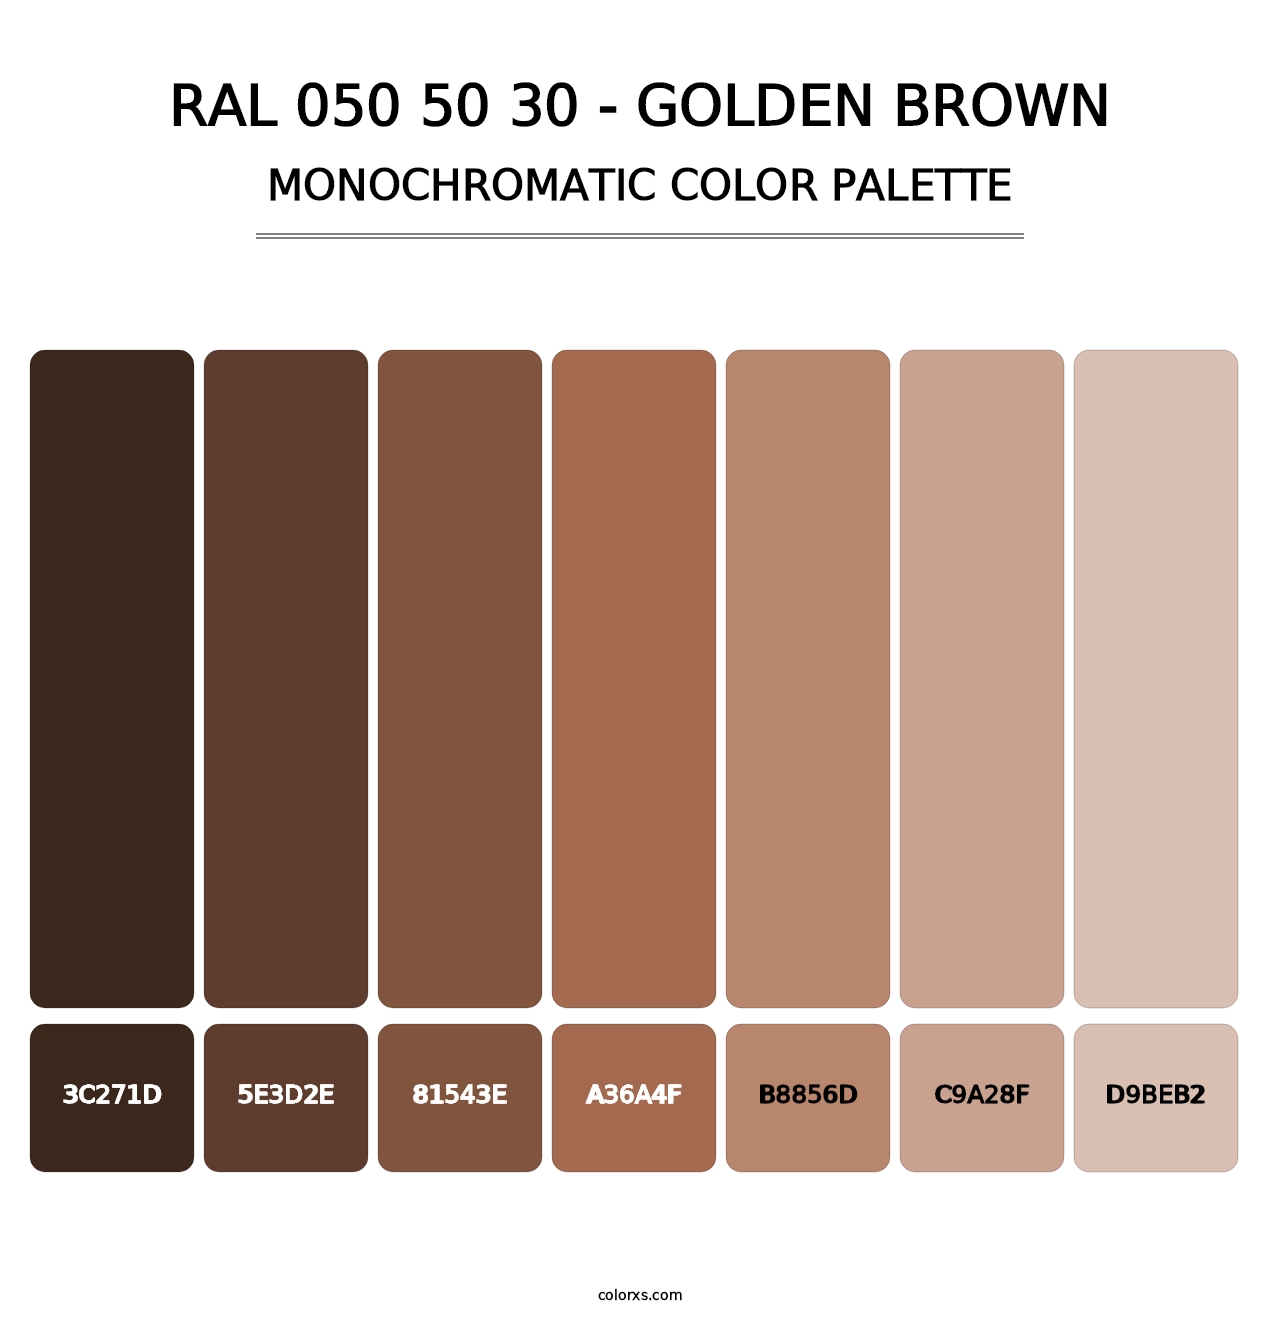 RAL 050 50 30 - Golden Brown - Monochromatic Color Palette